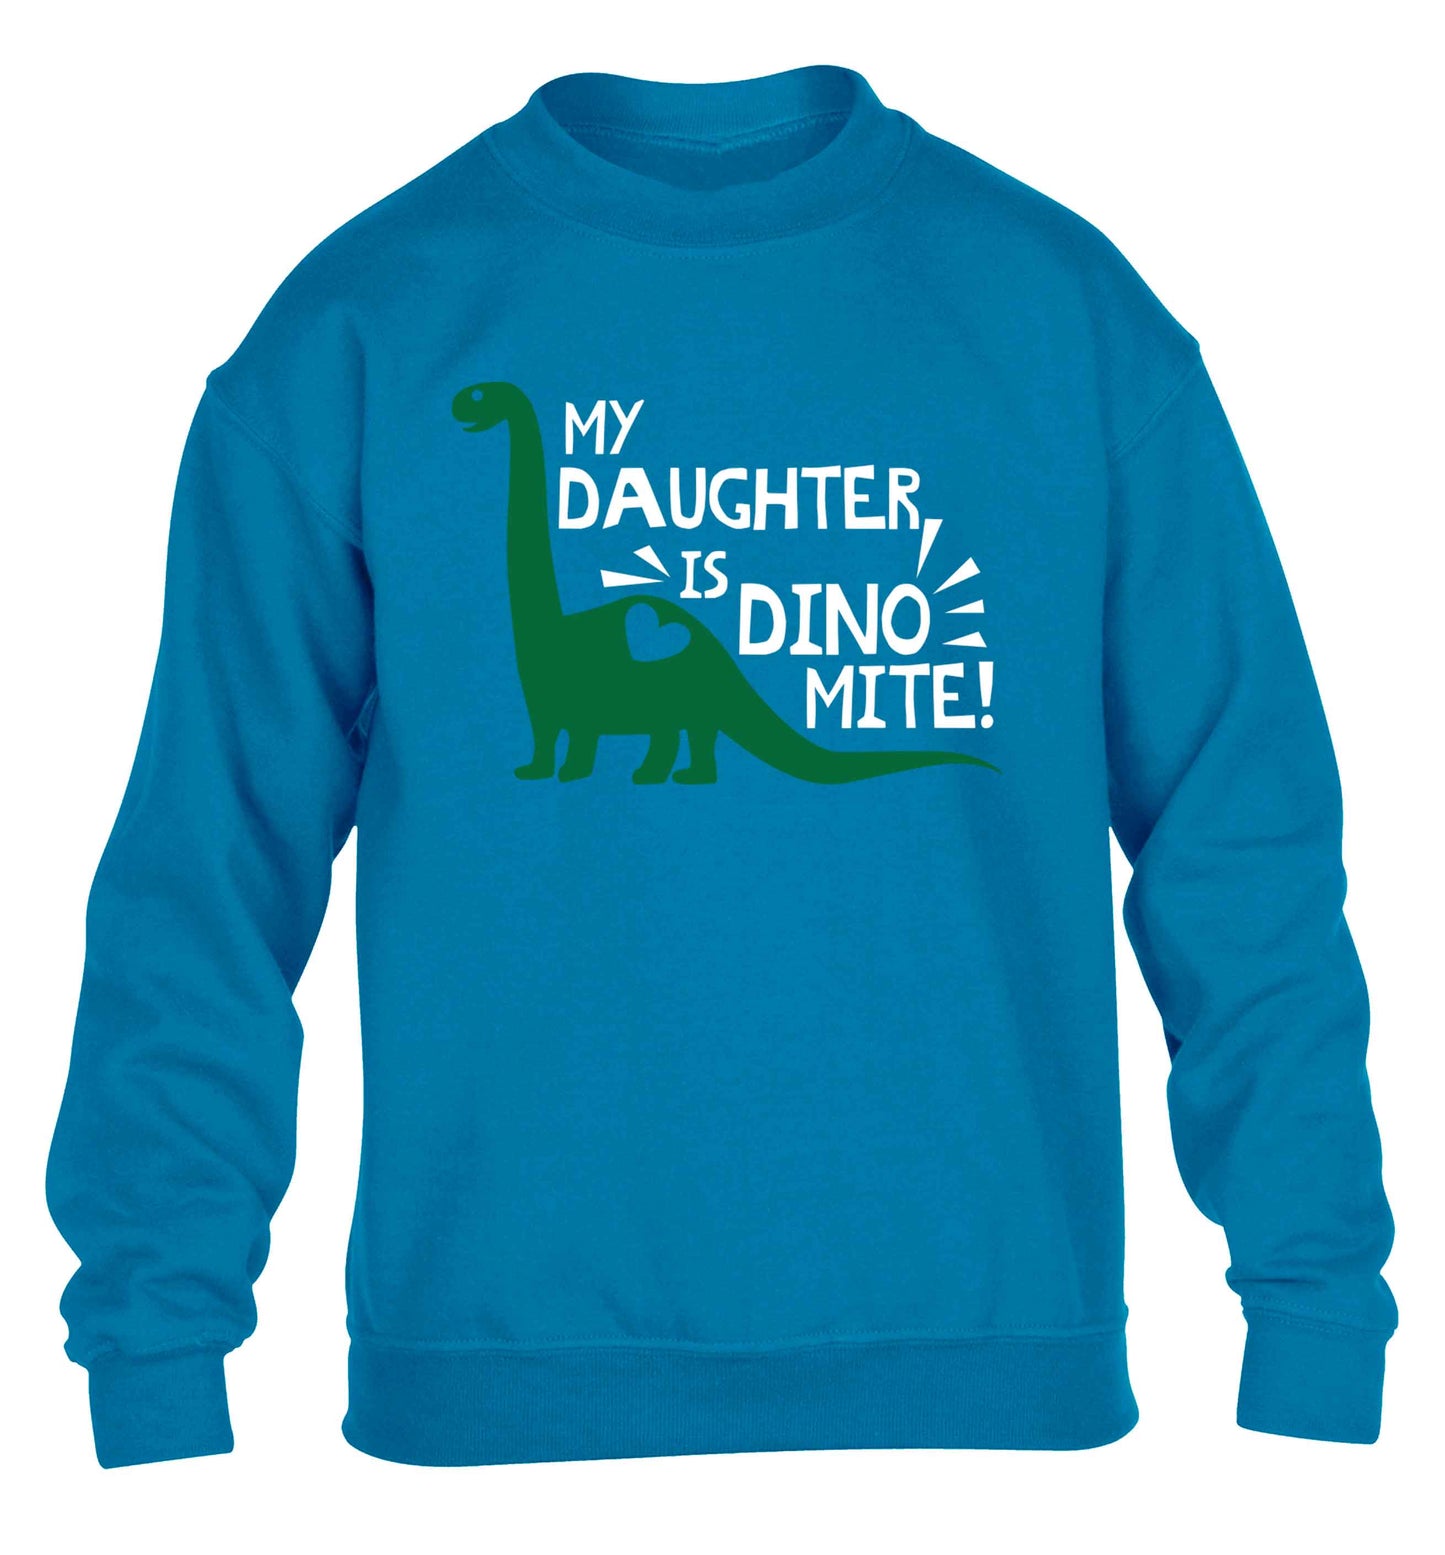 My daughter is dinomite! children's blue sweater 12-13 Years